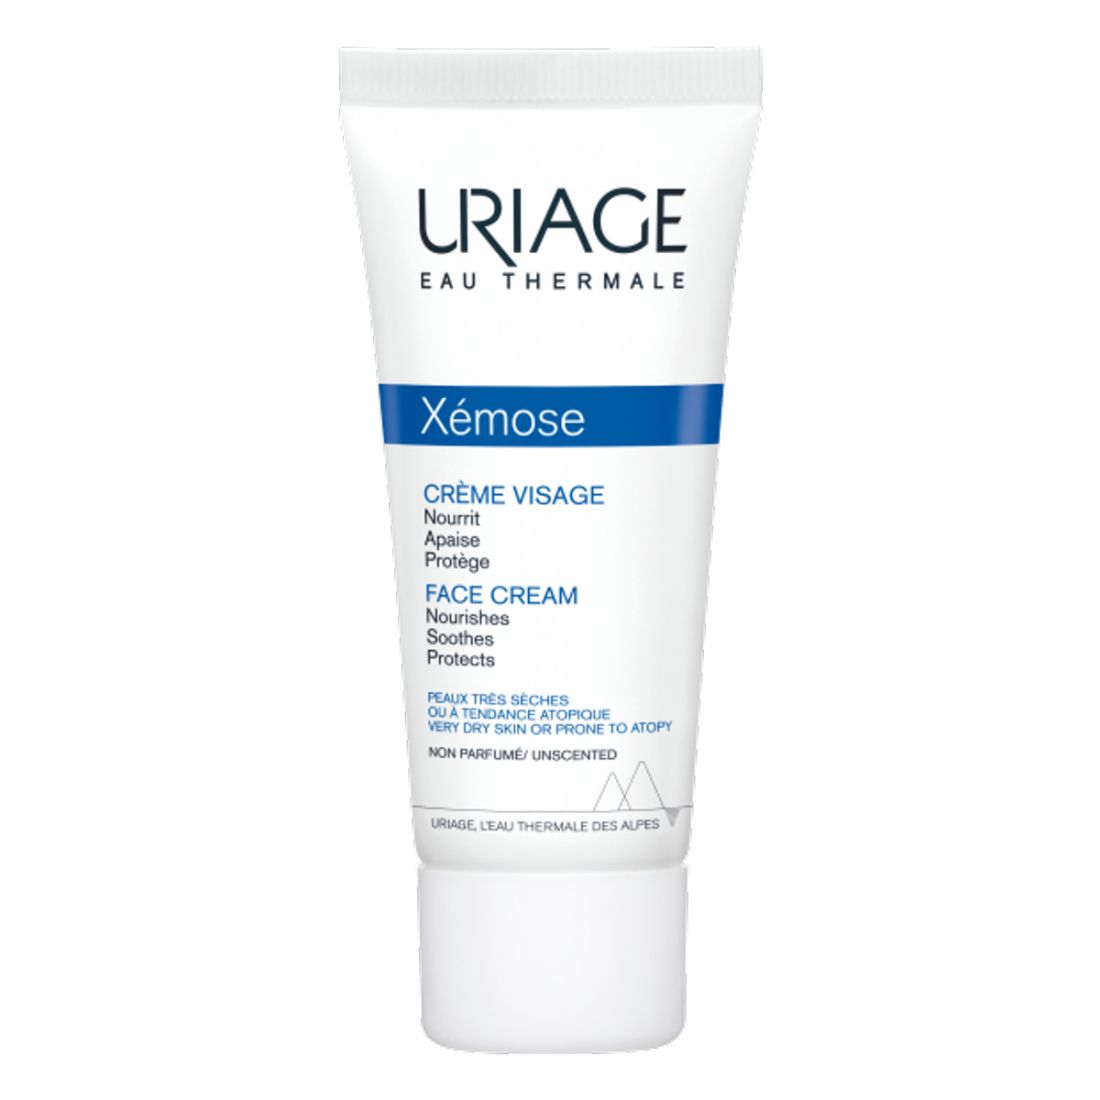 Uriage - Crème visage 'Xémose' - 40 ml